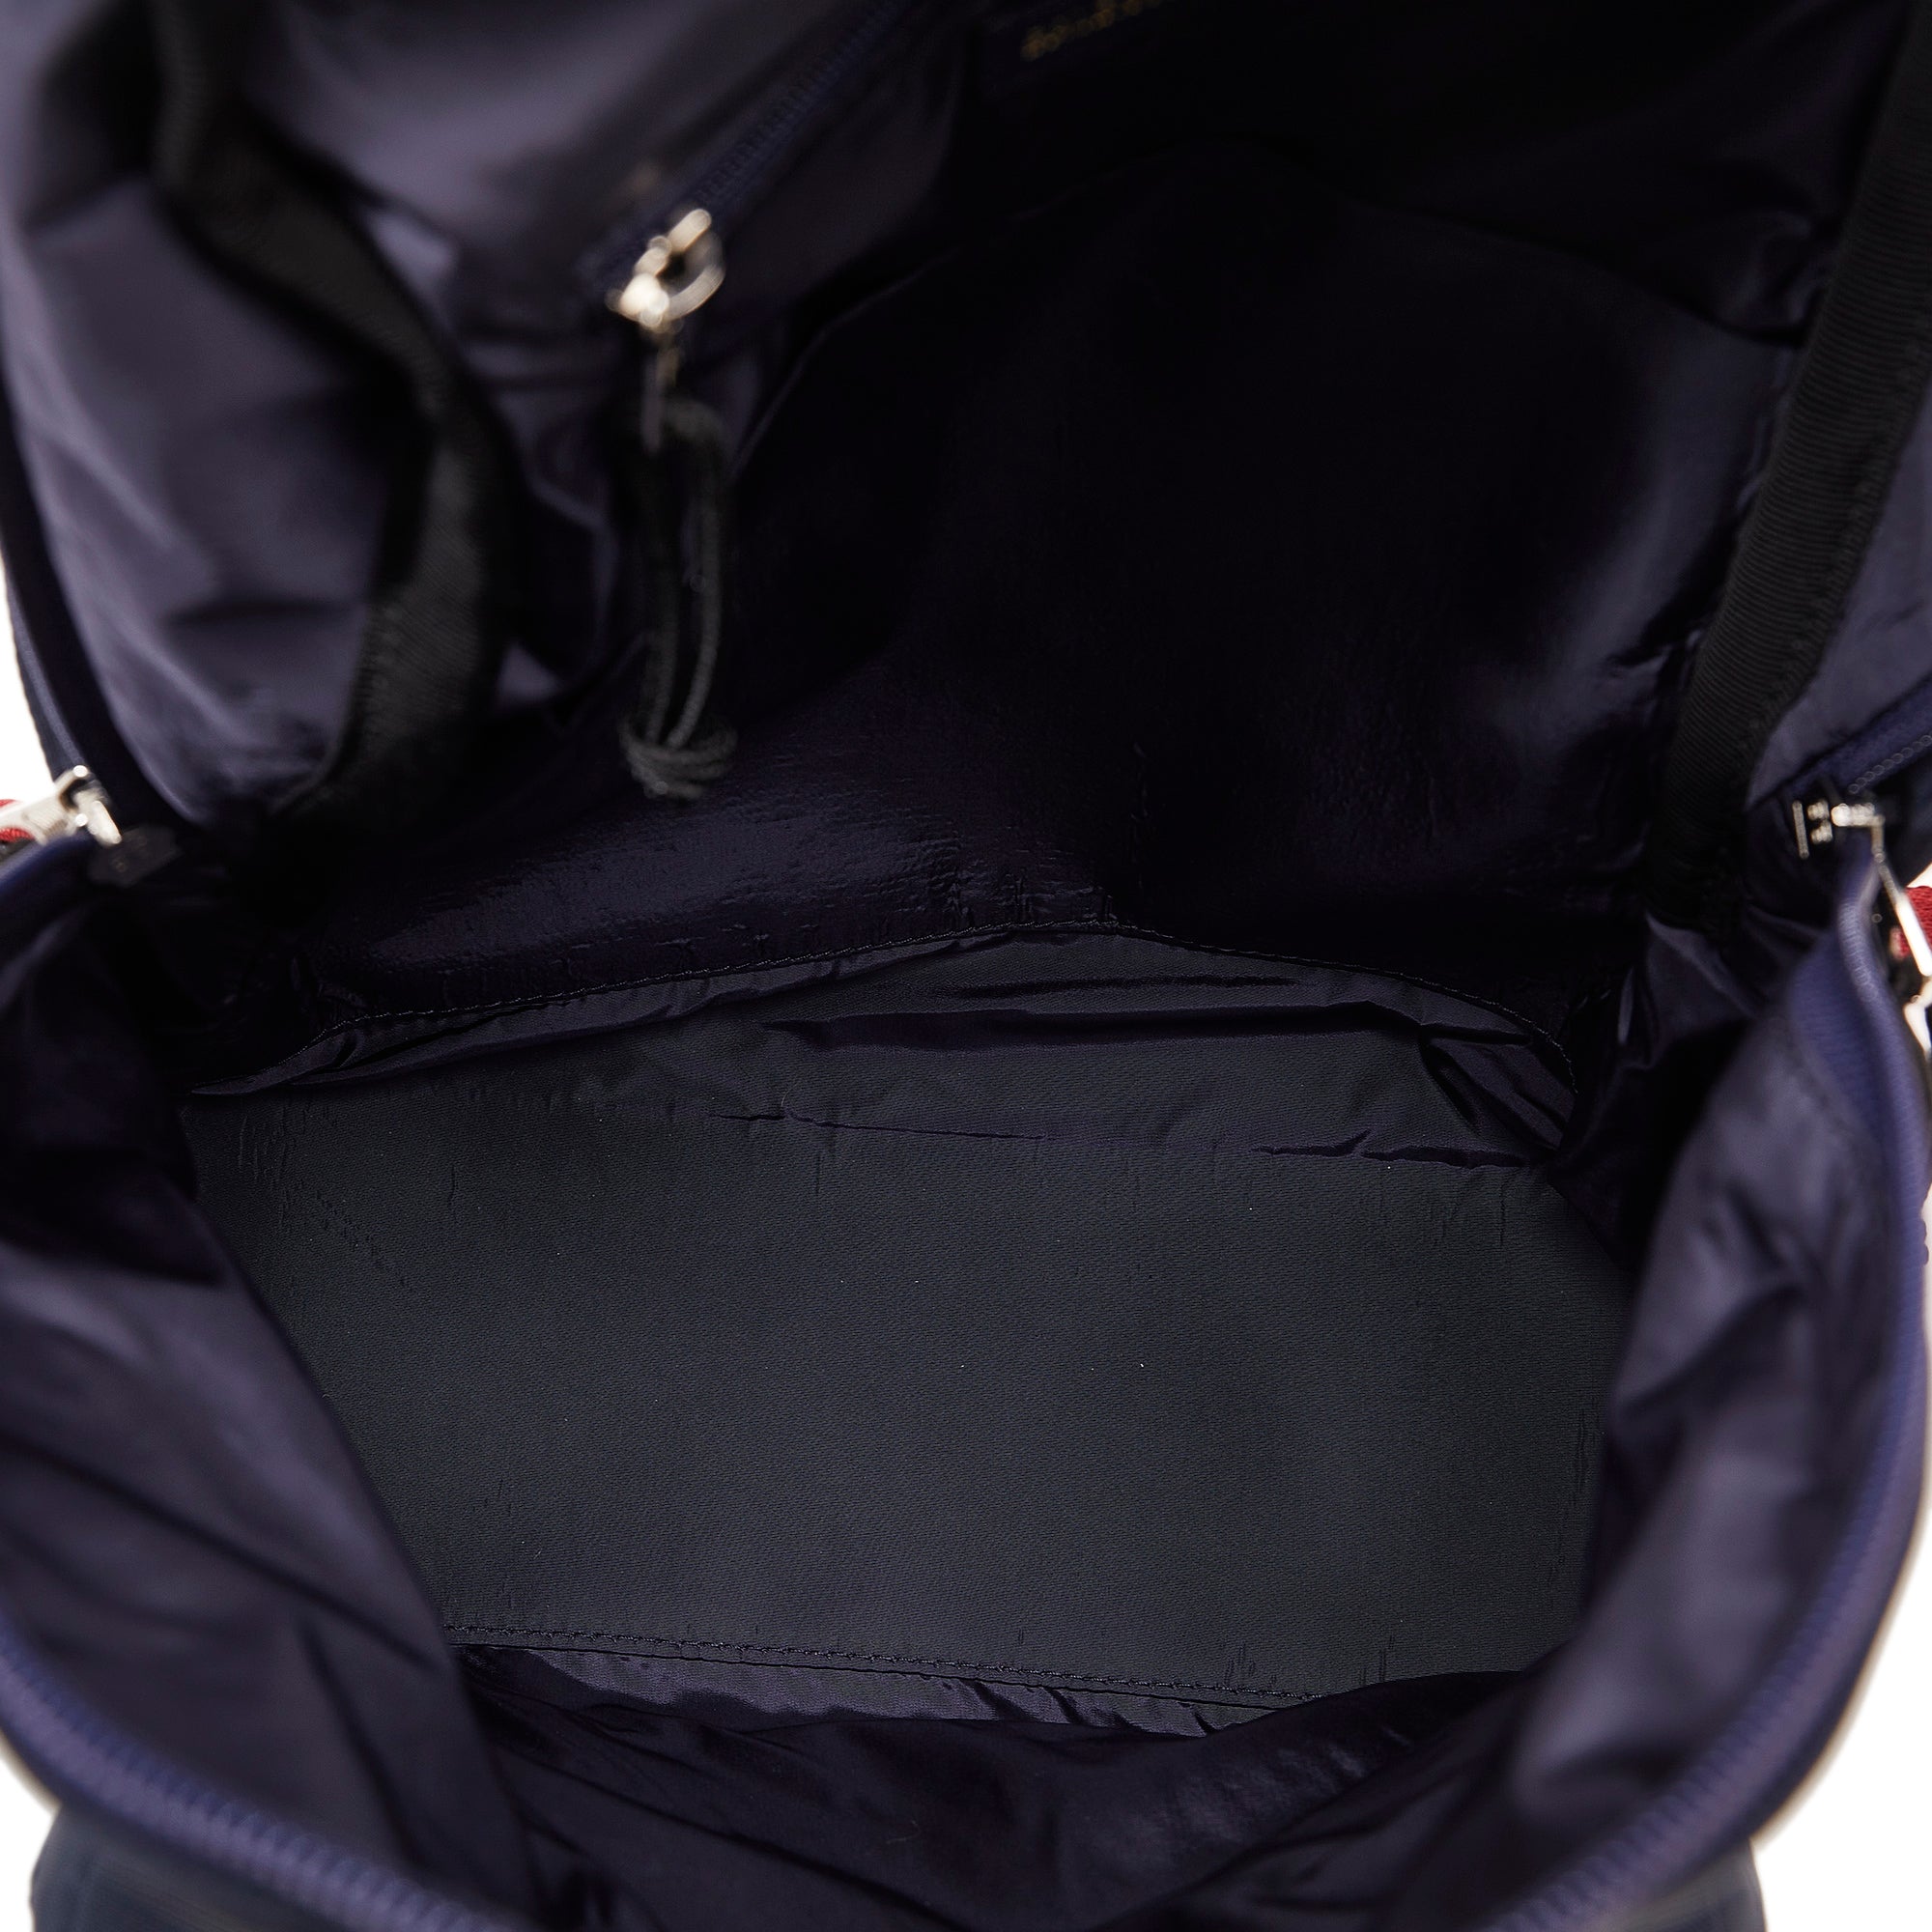 Wheel cloth backpack Balenciaga Blue in Cloth - 31679329